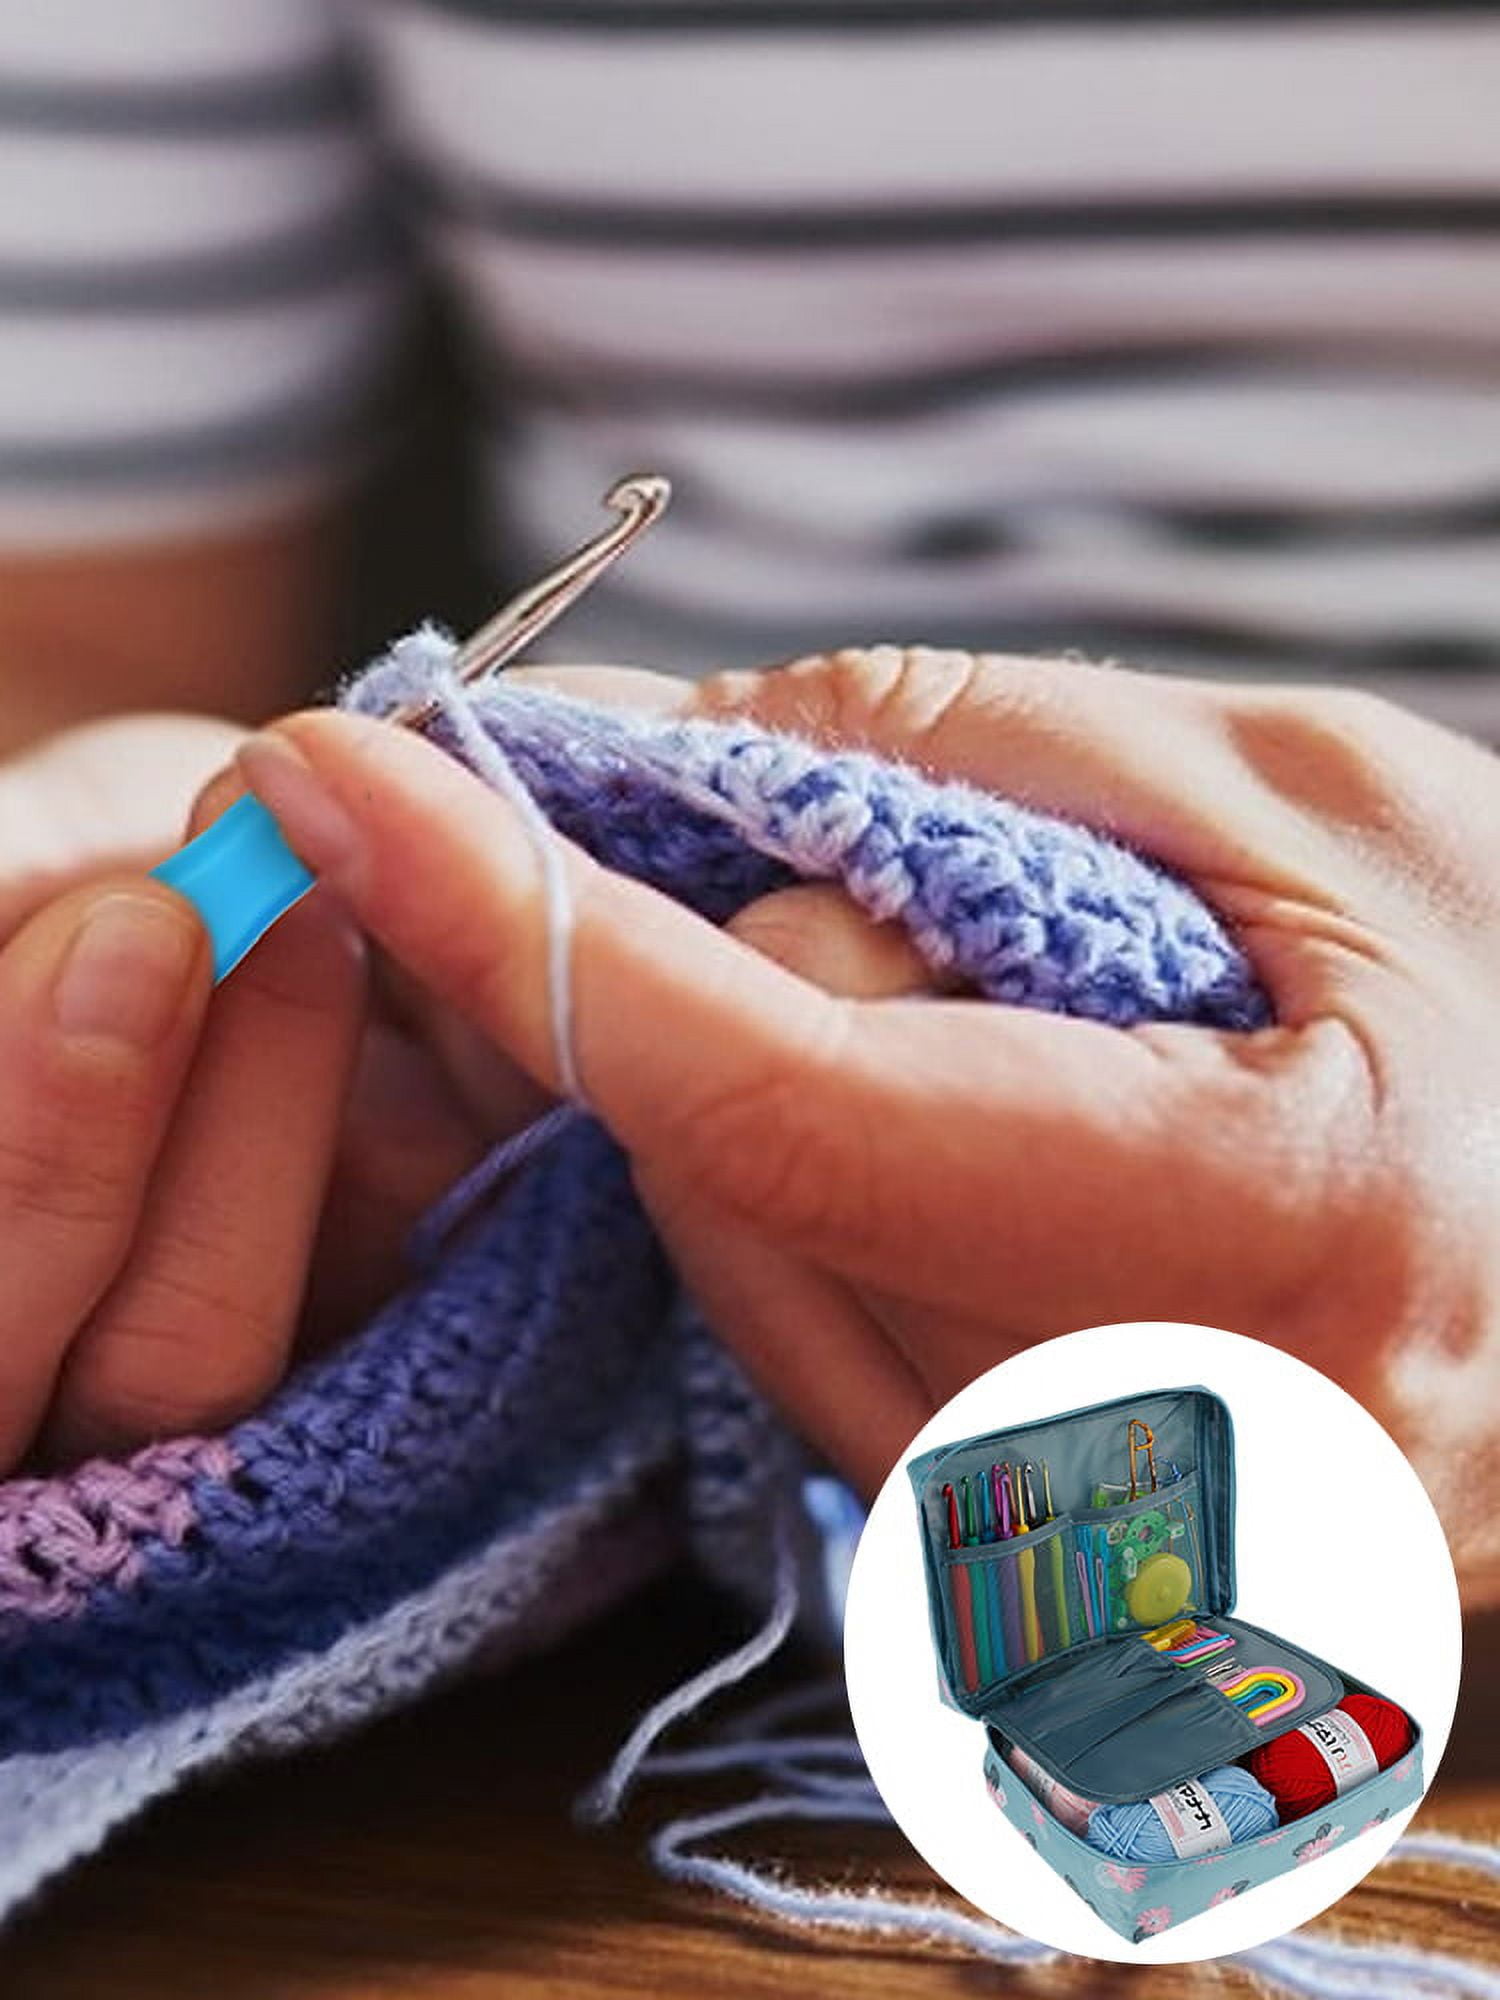 Crochet Hooks Set 59pcs Knitting Needles Sets 1.0-6.0mm Ergonomic Crochet Kits Soft Grip Handle Crochet Tools Yarn Knitting Tool Accessories with